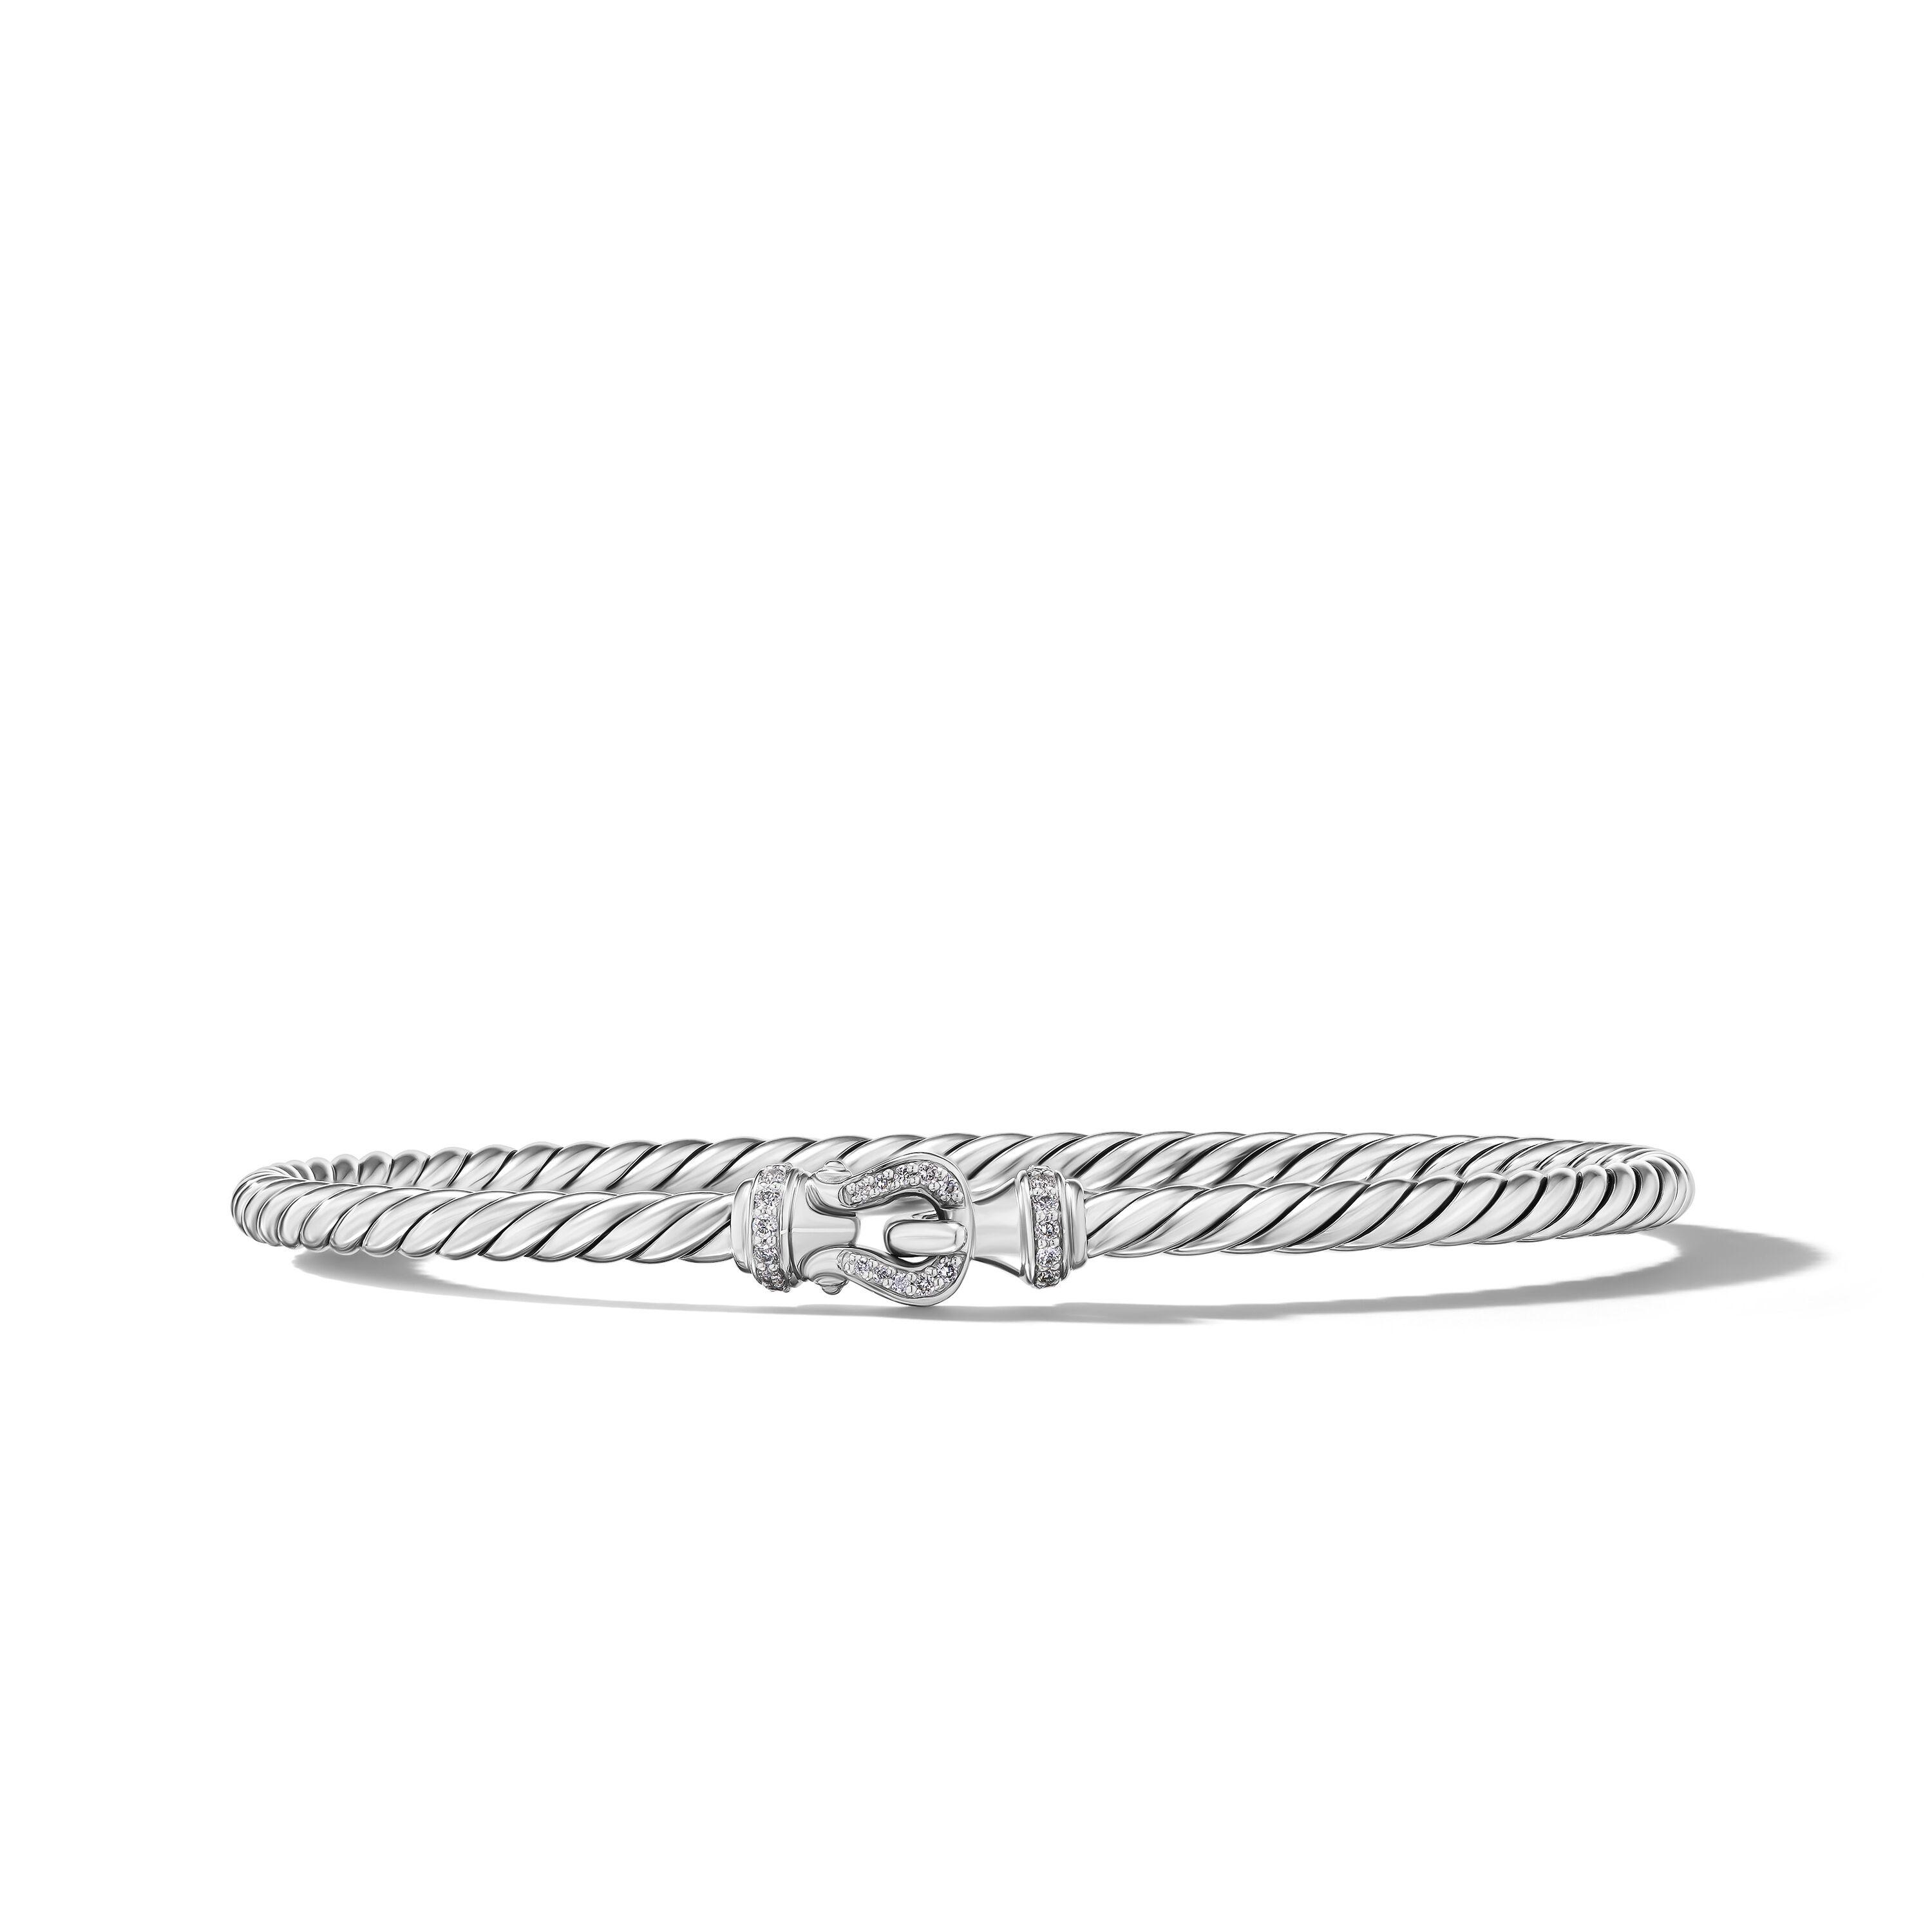 David Yurman 3mm Buckle Bracelet in Sterling Silver with Diamonds, Size Large